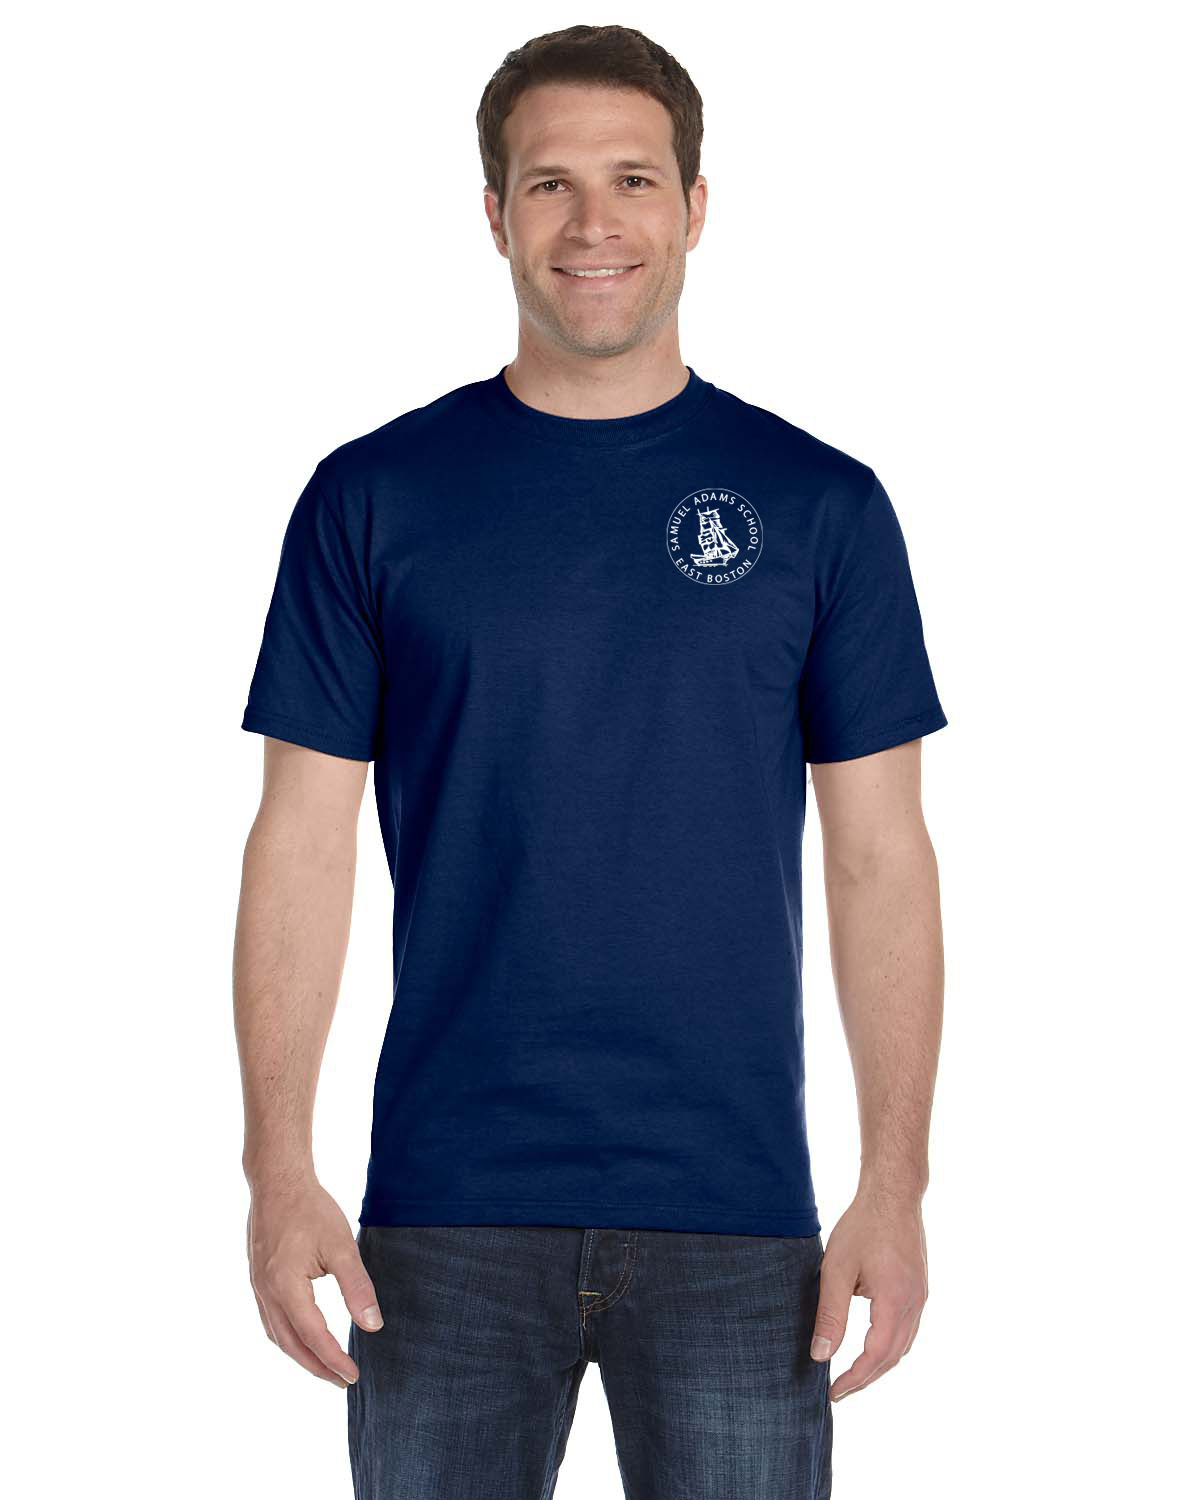 Adult T-Shirt